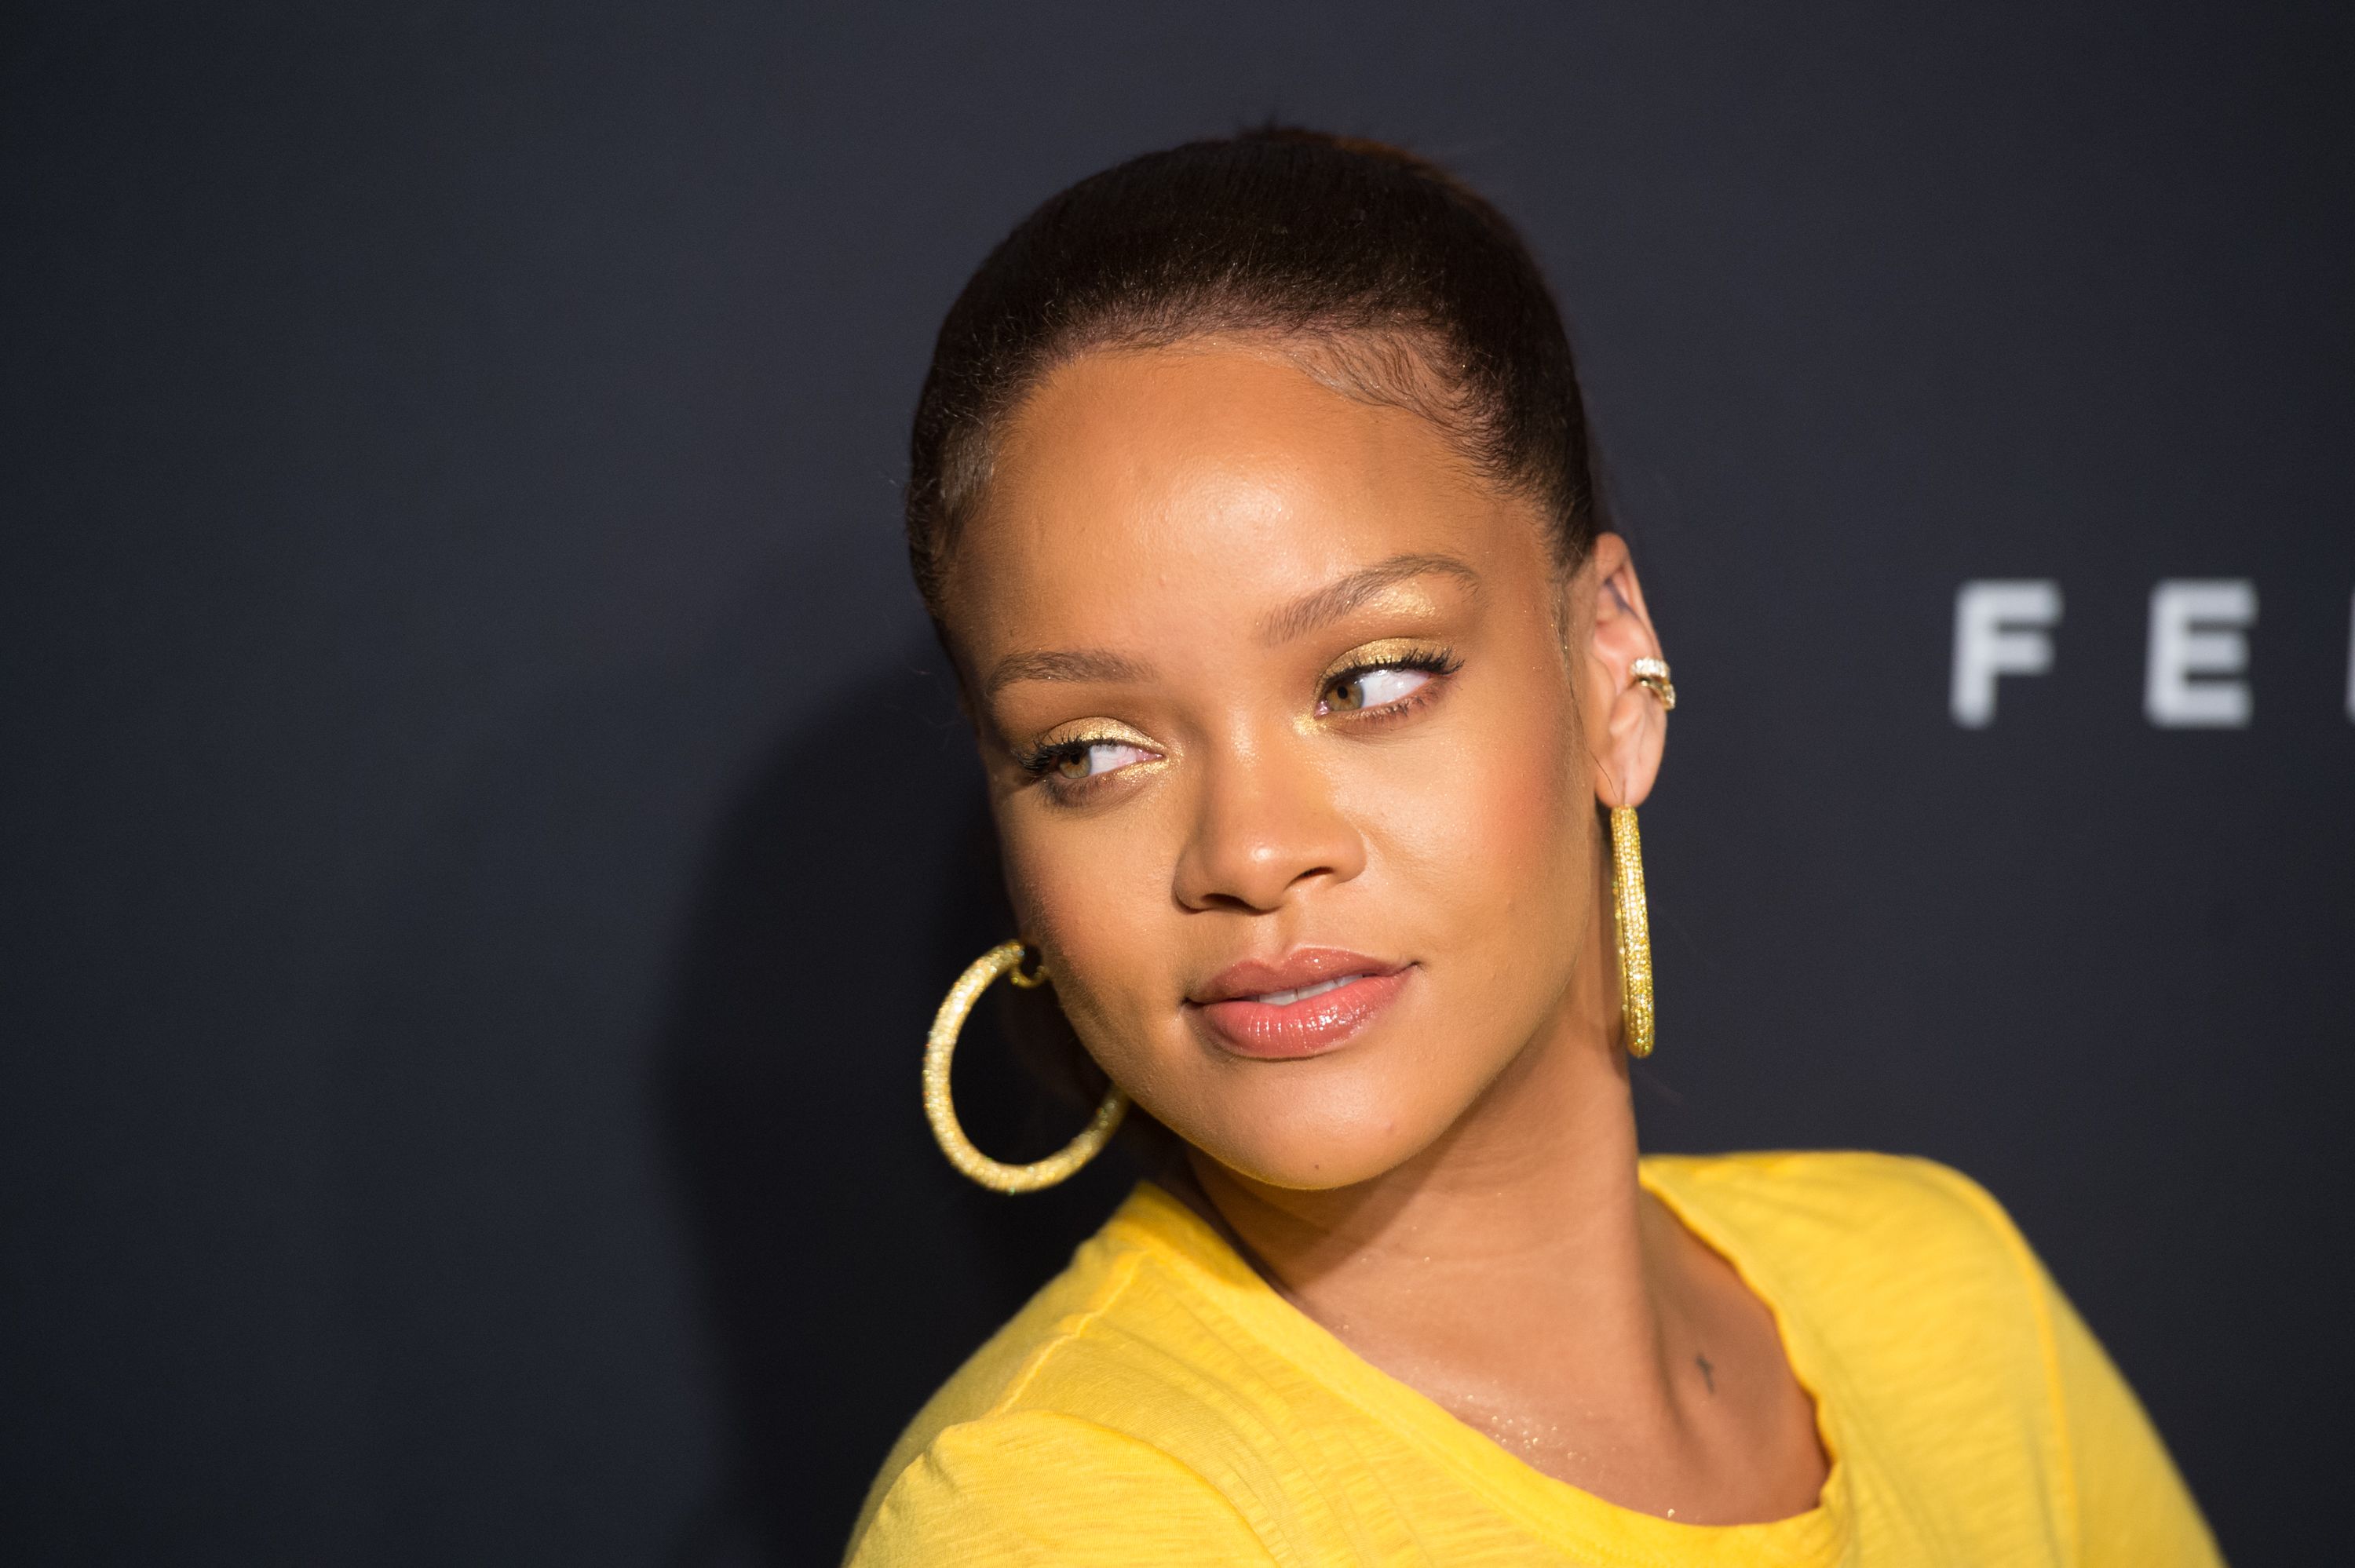 Rihanna's Fenty Beauty Shade Range Is Getting Thankful Reviews